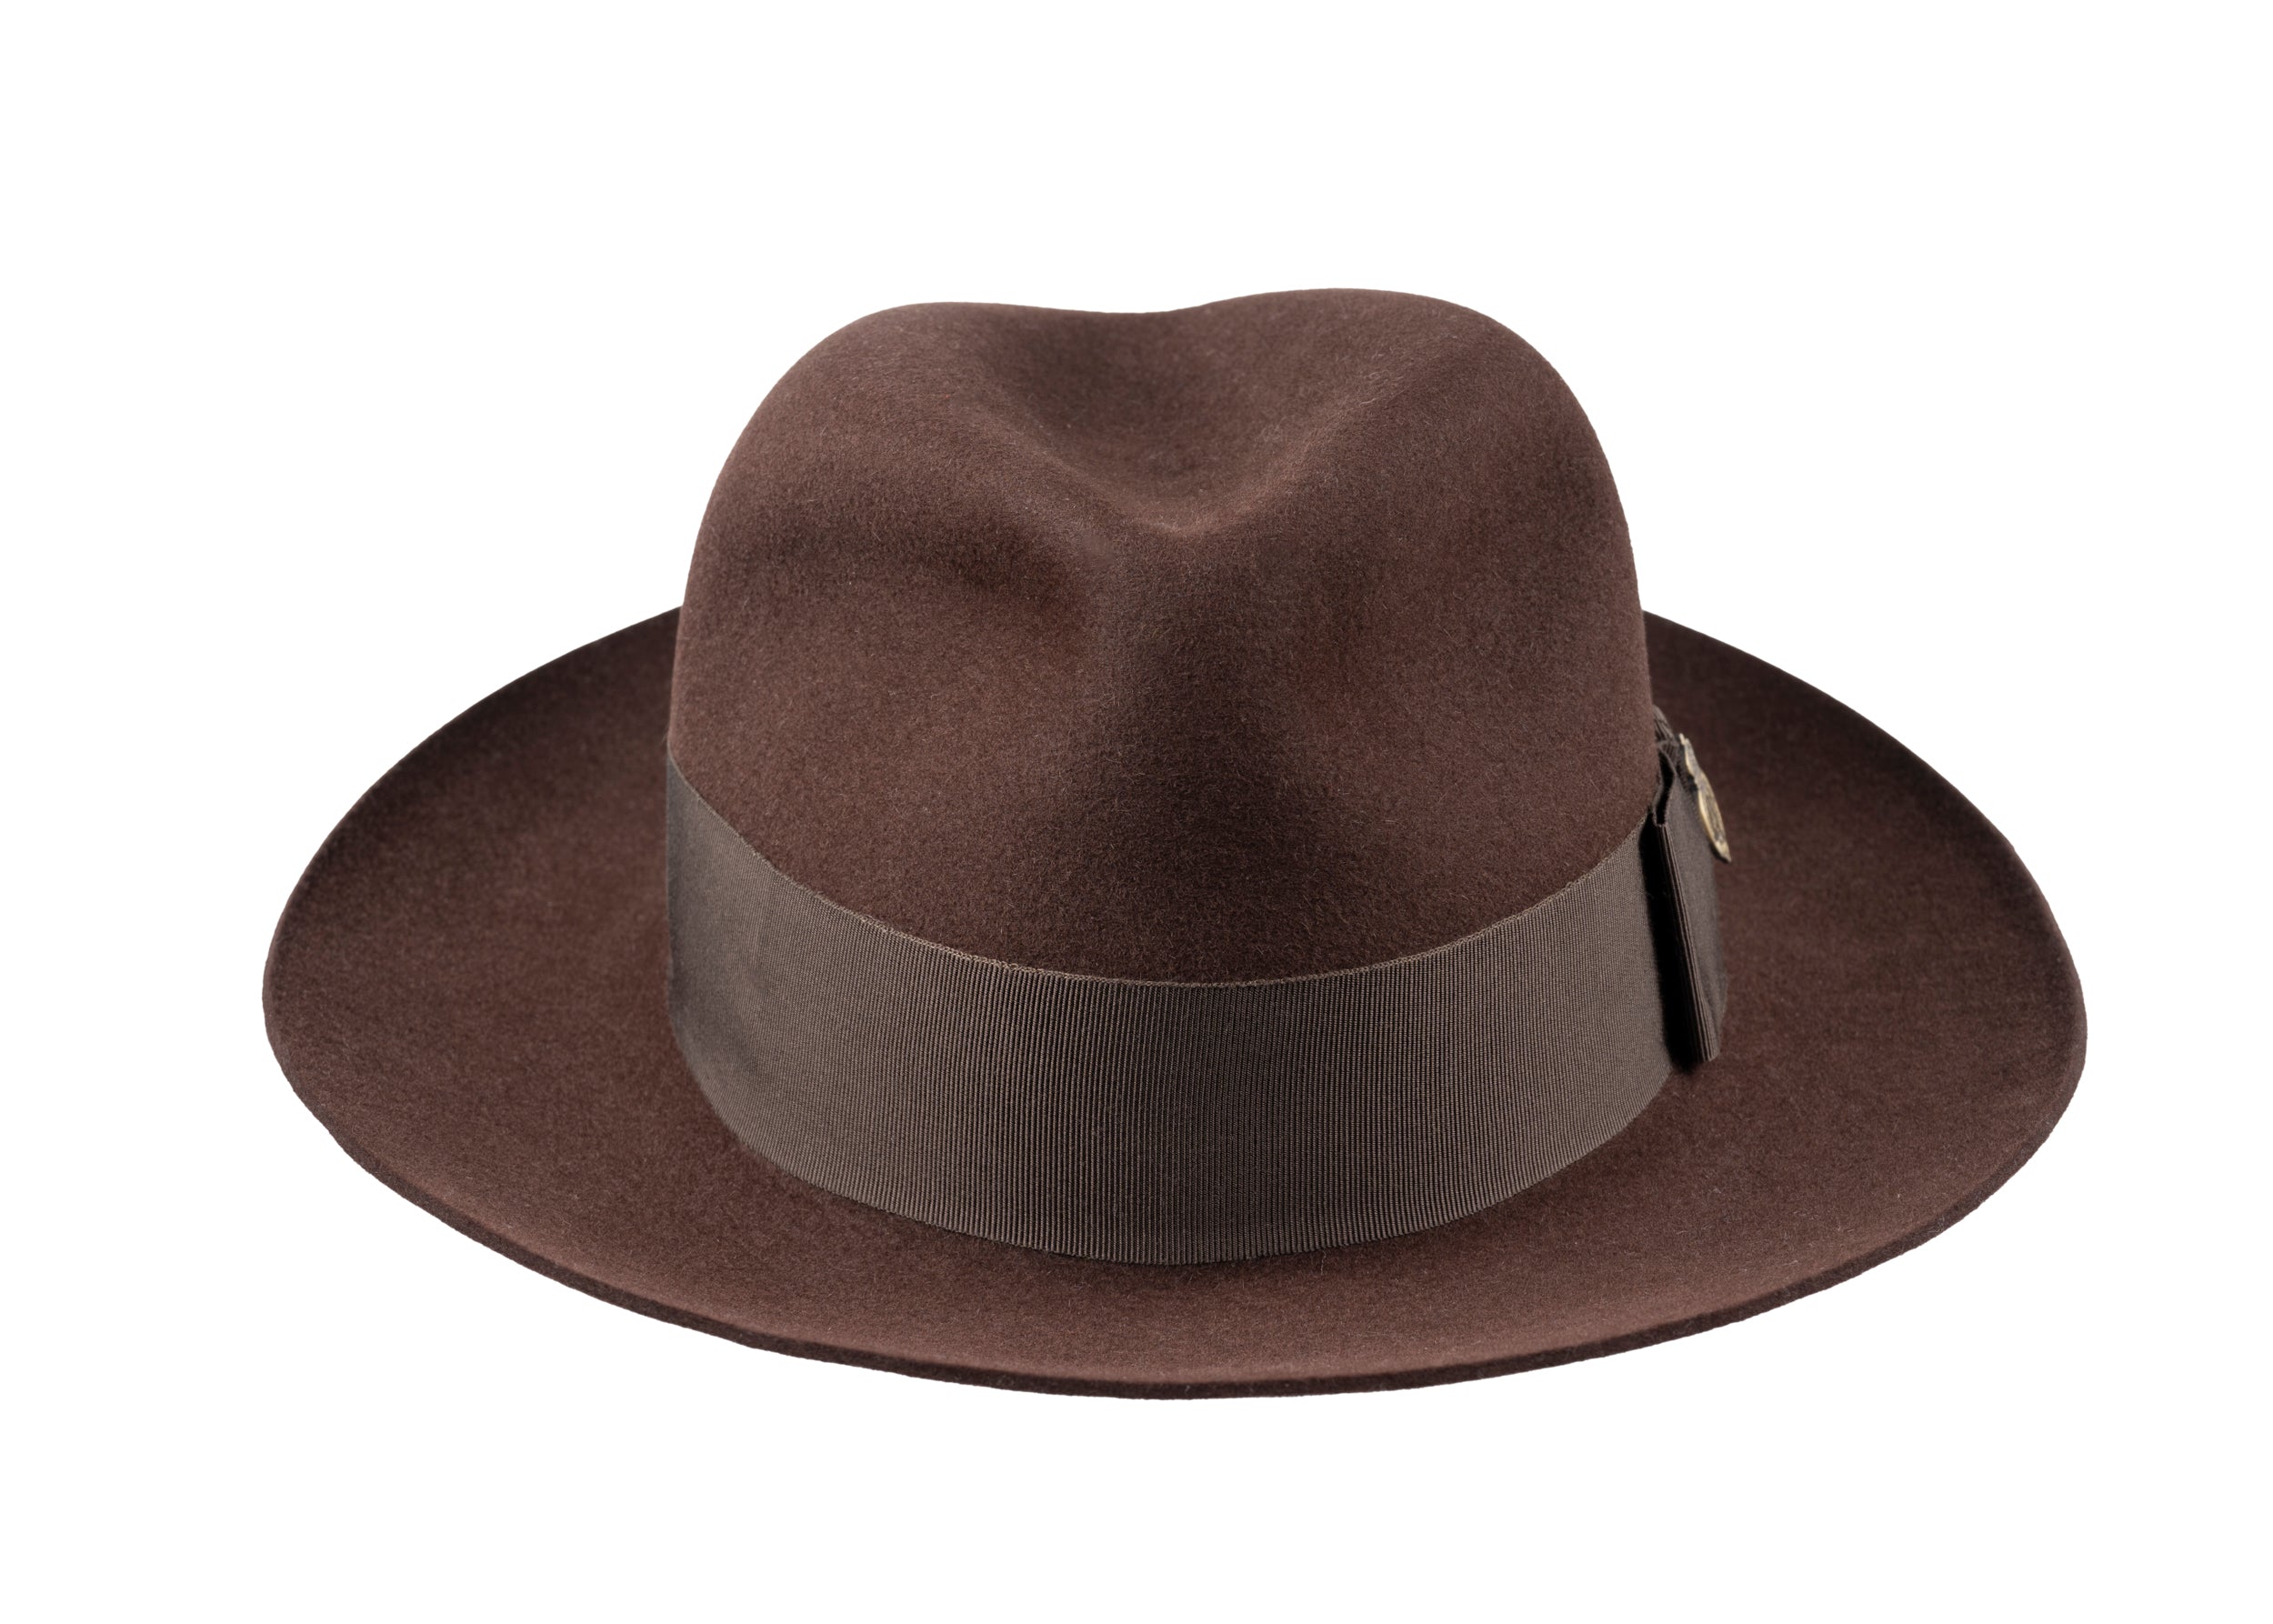 Knightsbridge Style Hat | Buy Fedora style hats online | by 